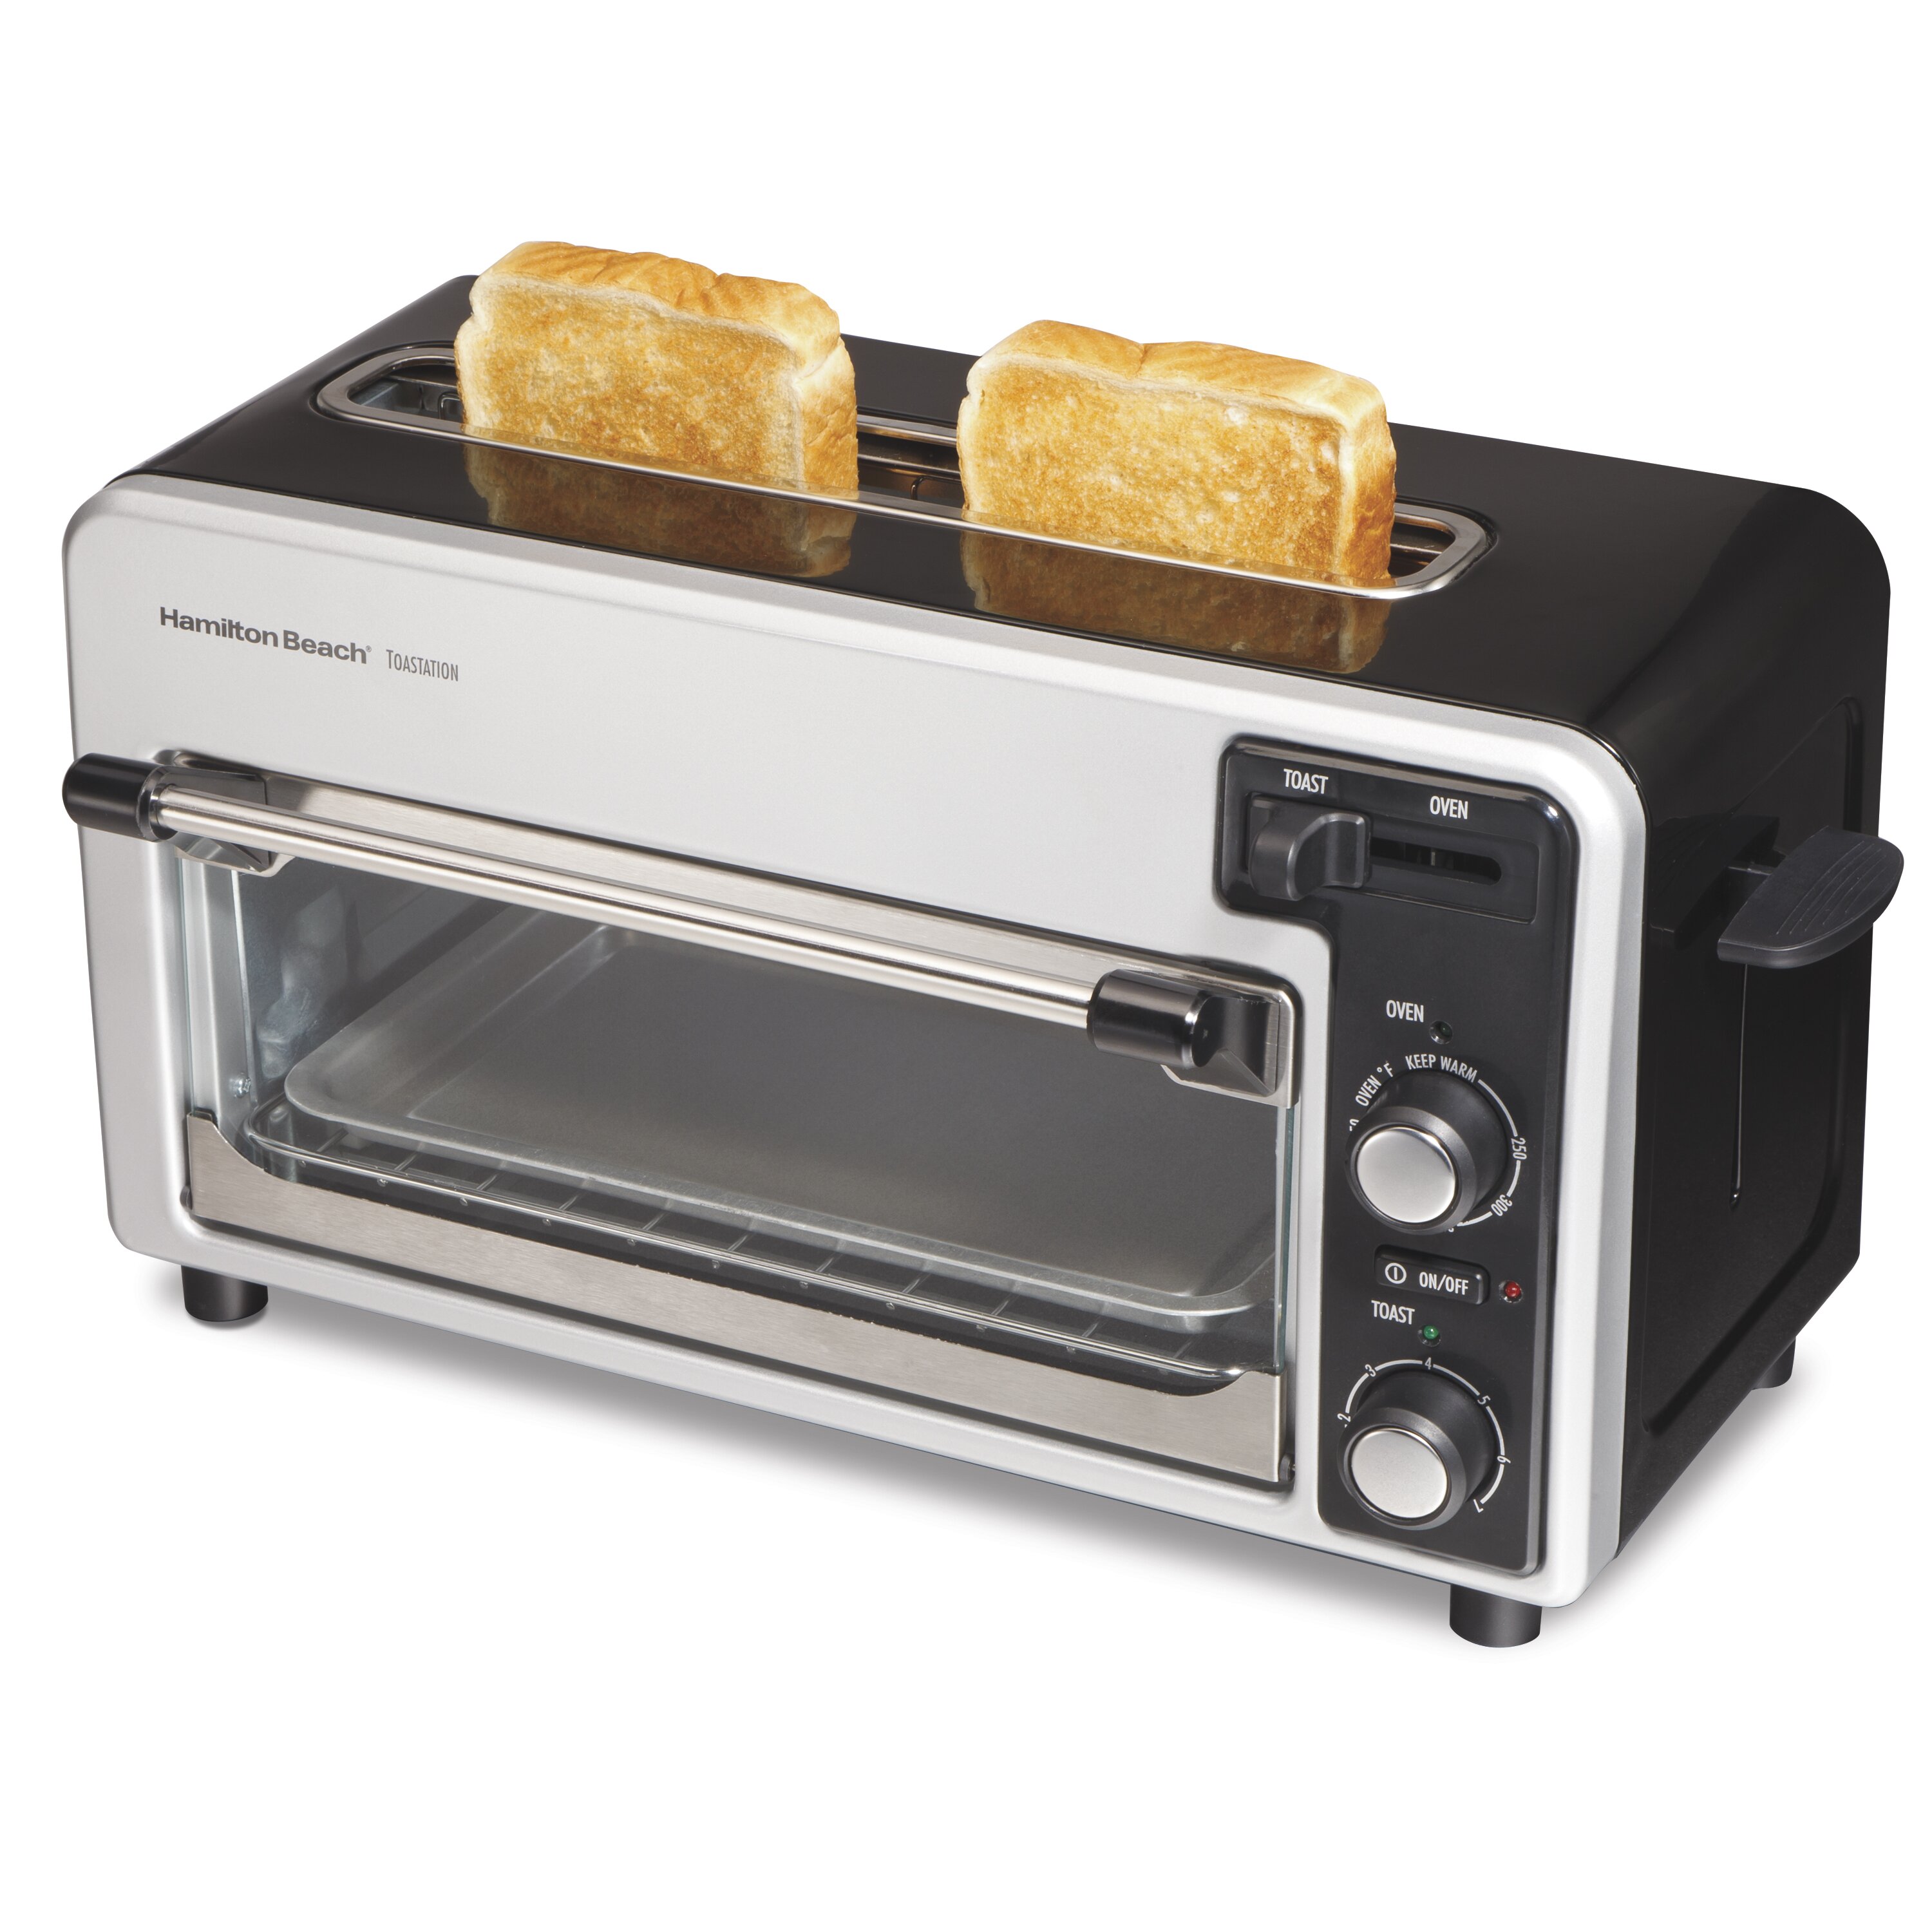 Hamilton Beach Toastation Combination Toaster And Toaster Oven 22720 22722 